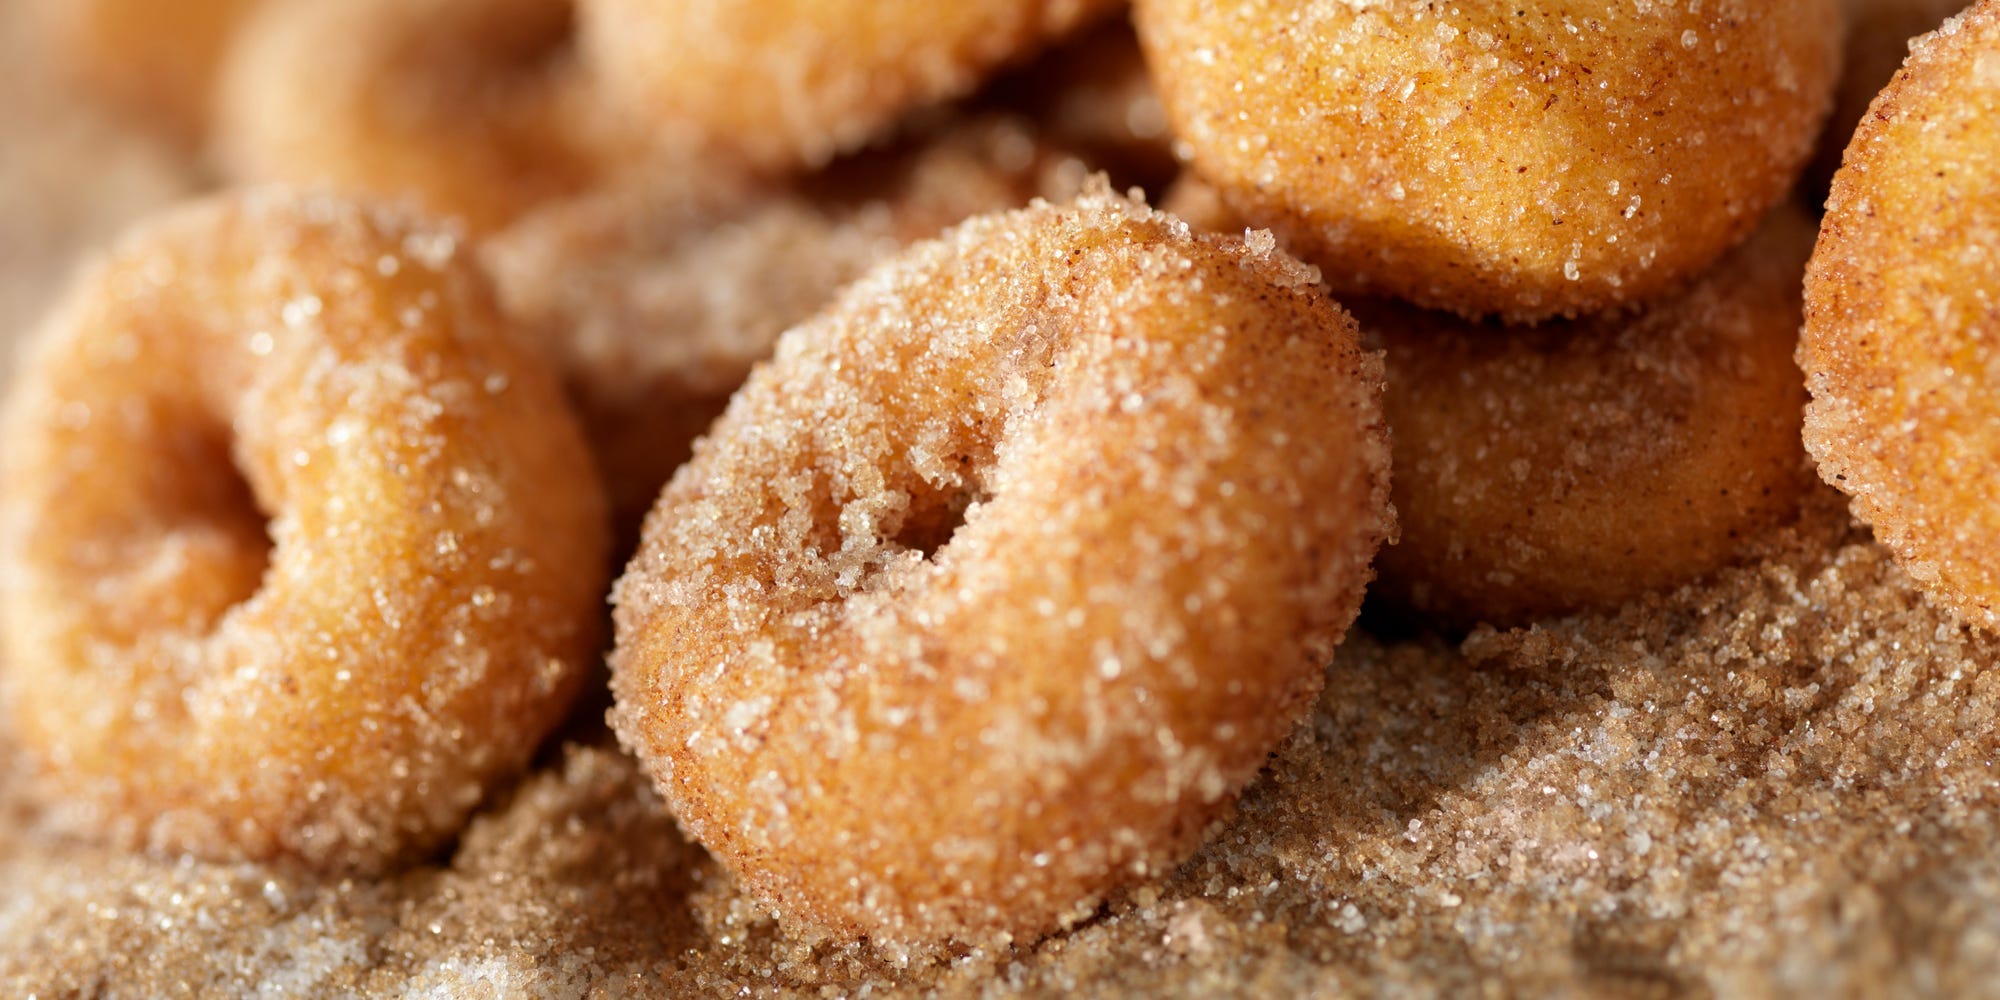 A closeup of a pile of mini donuts covered in cinnamon sugar